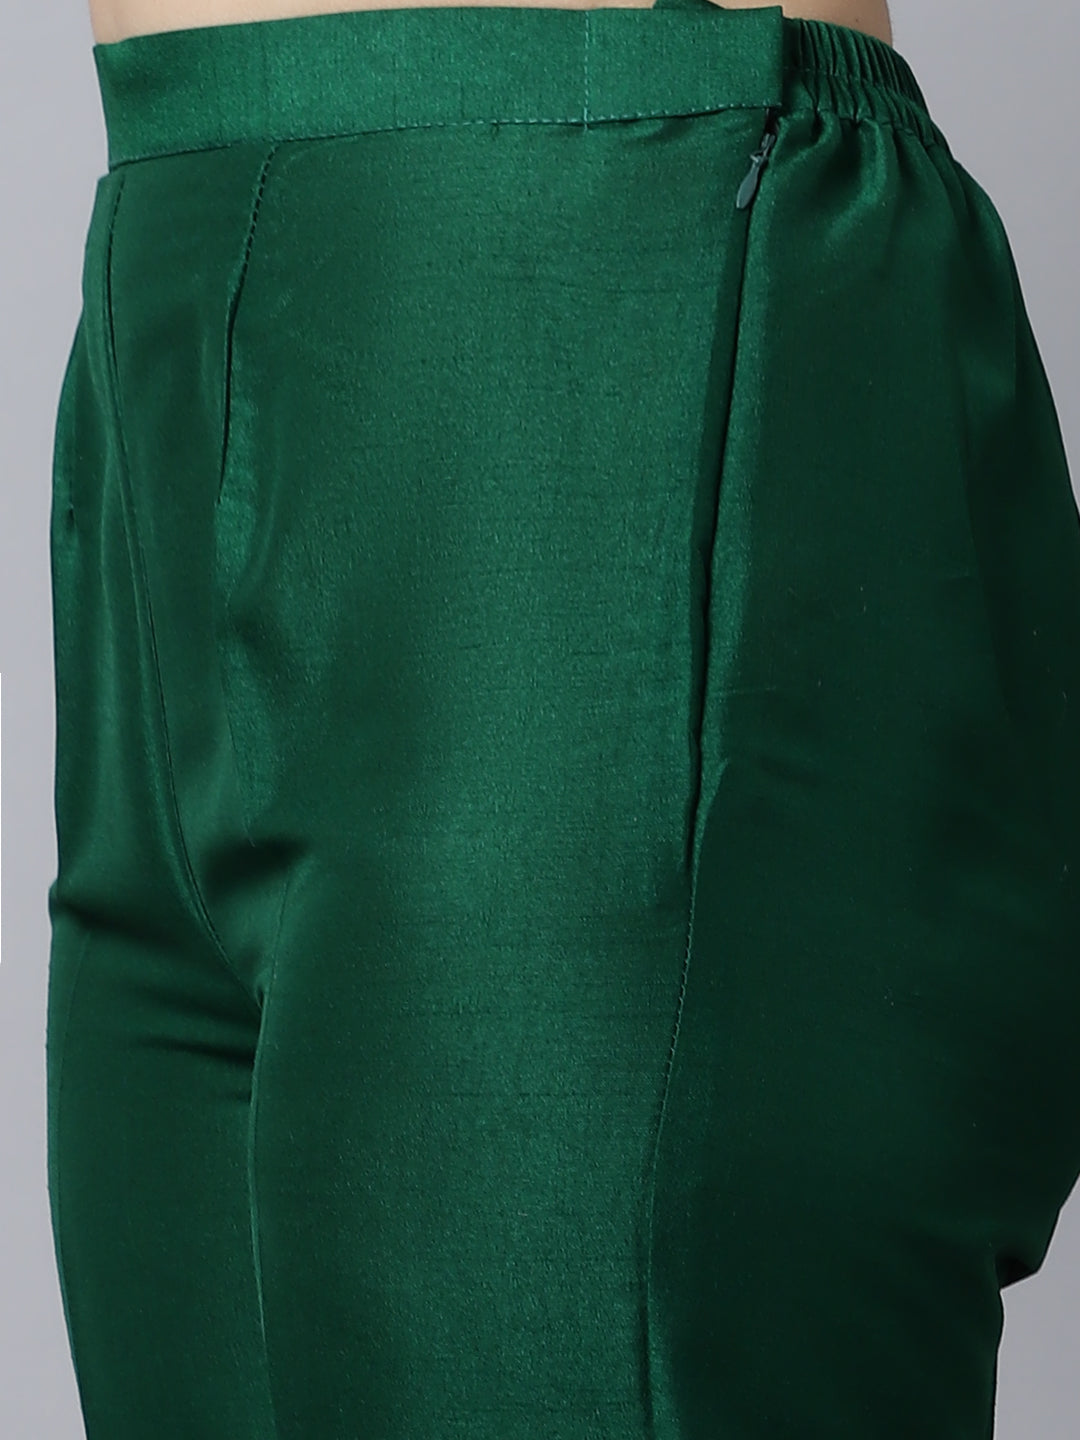 Women's Sizzling Green Silk Kurti With Pants - Anokherang